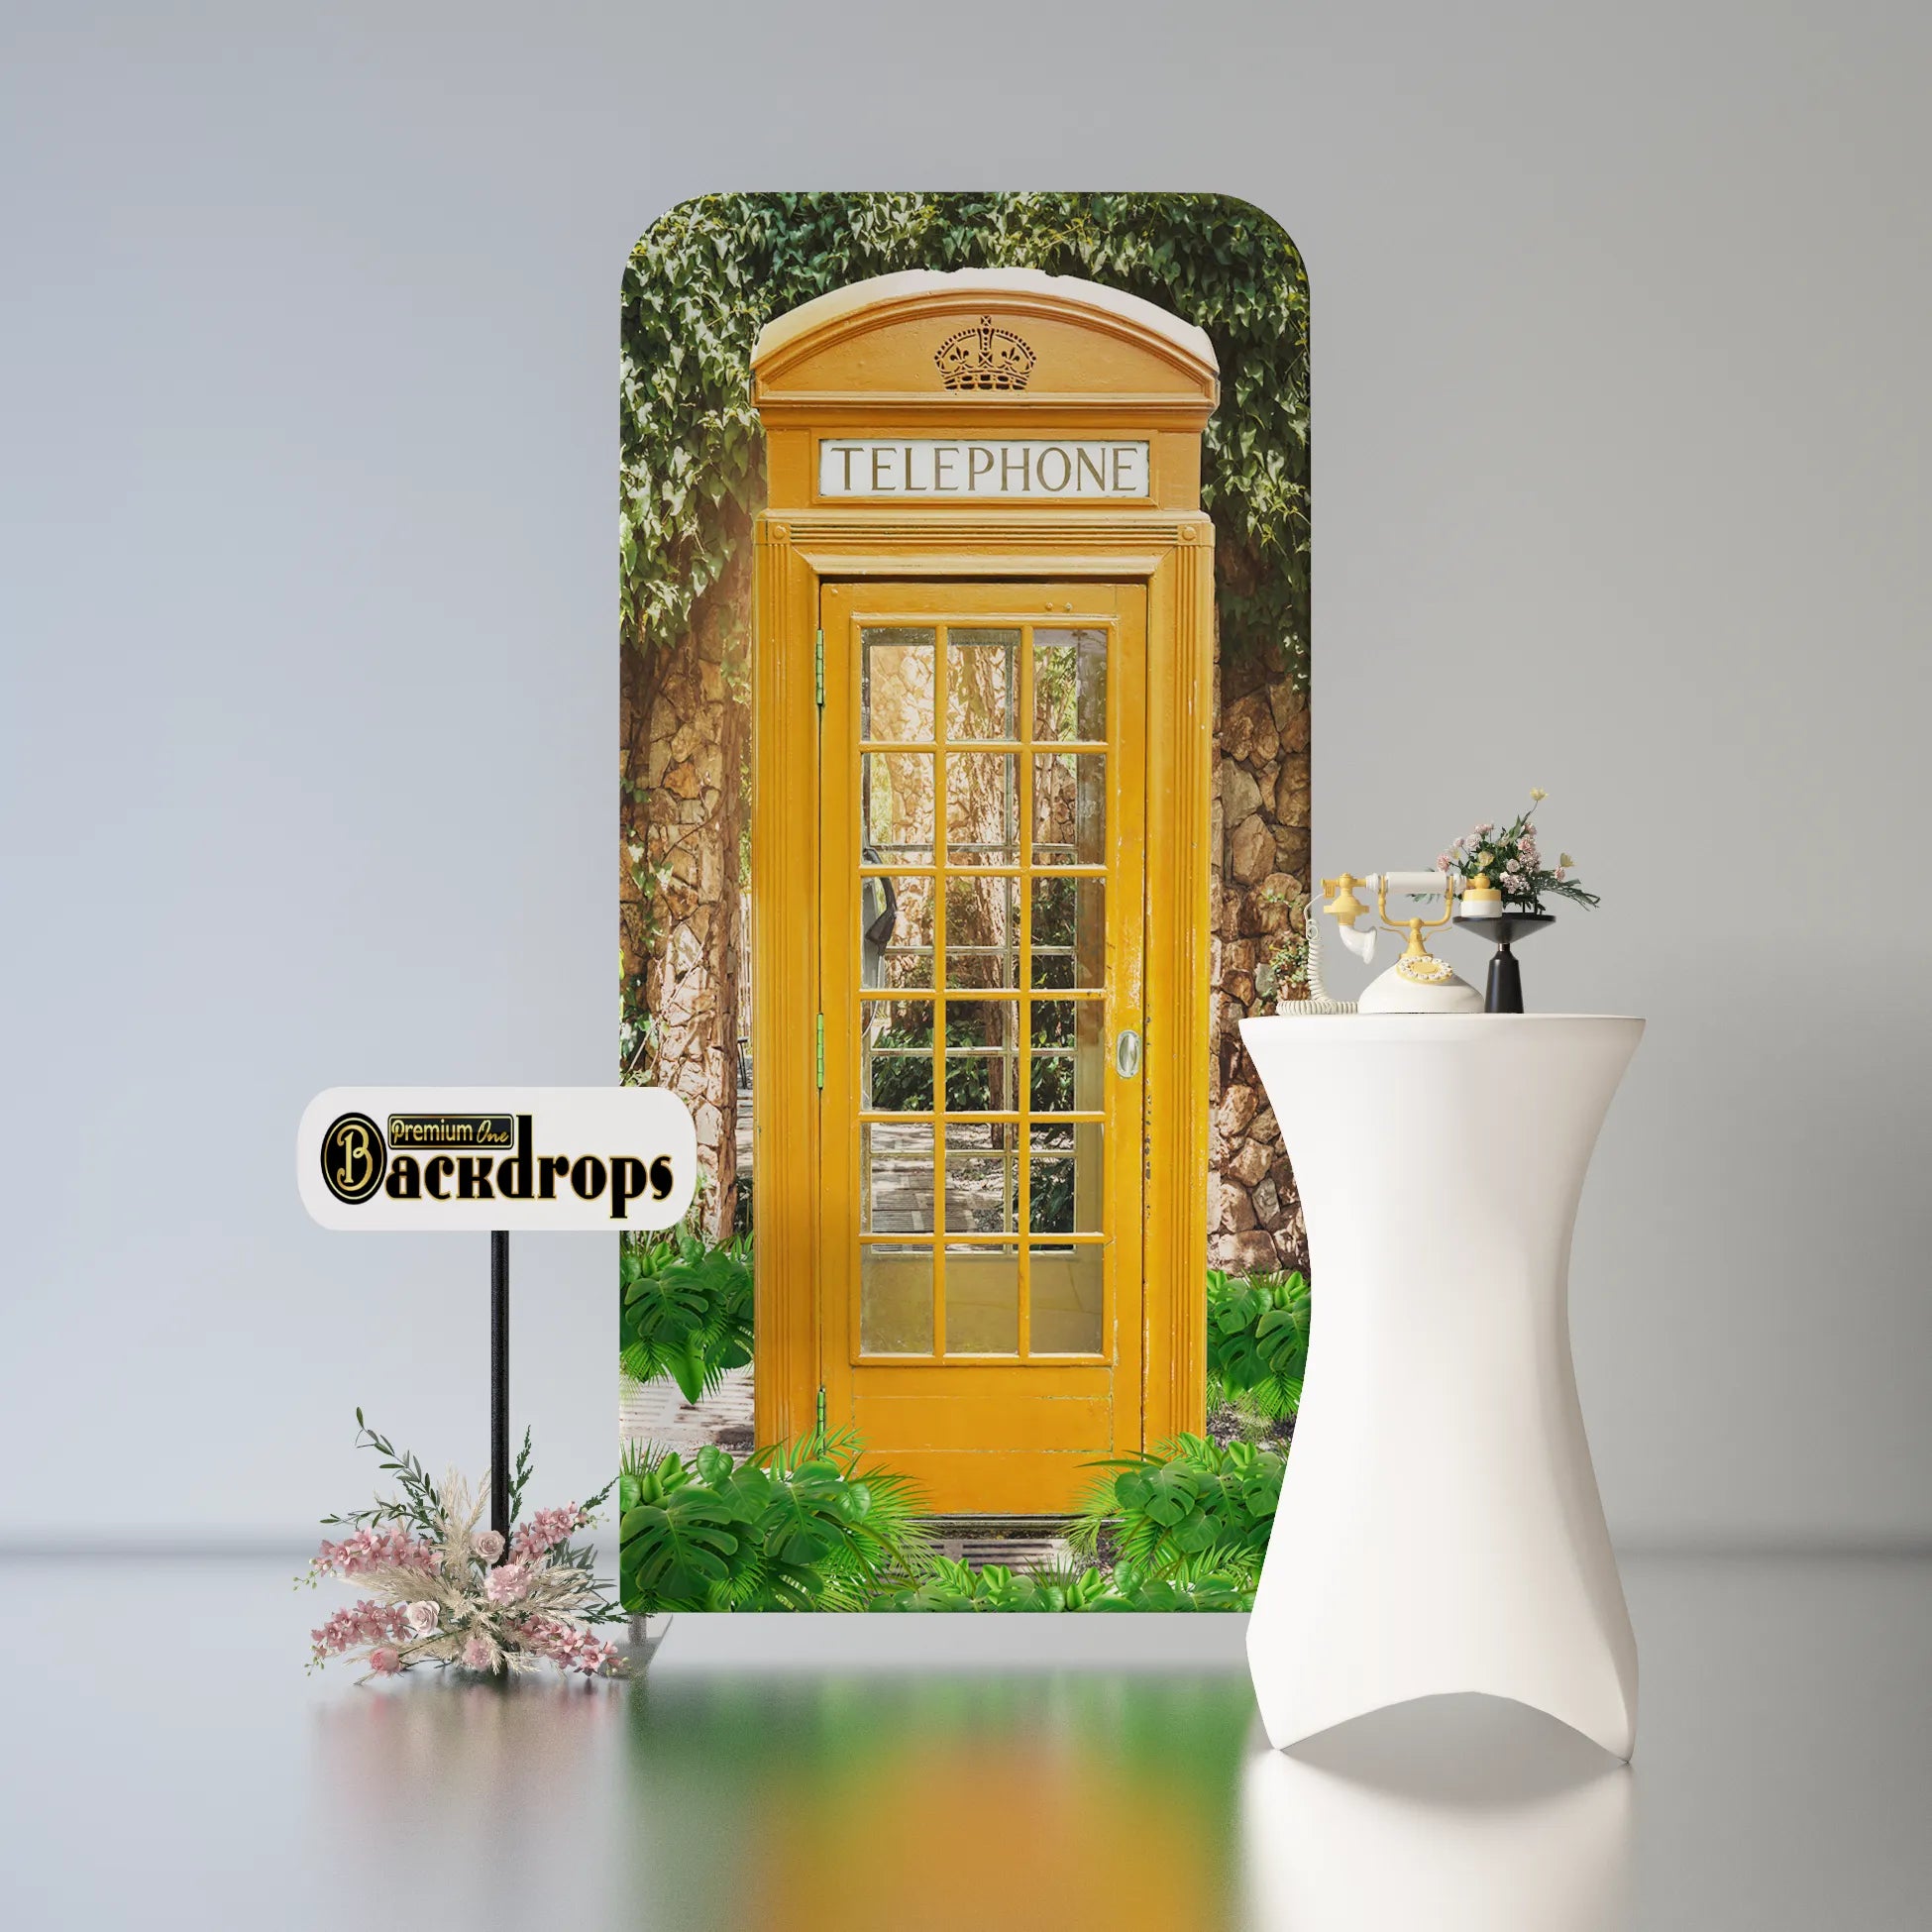 Telephone Booth Design 40